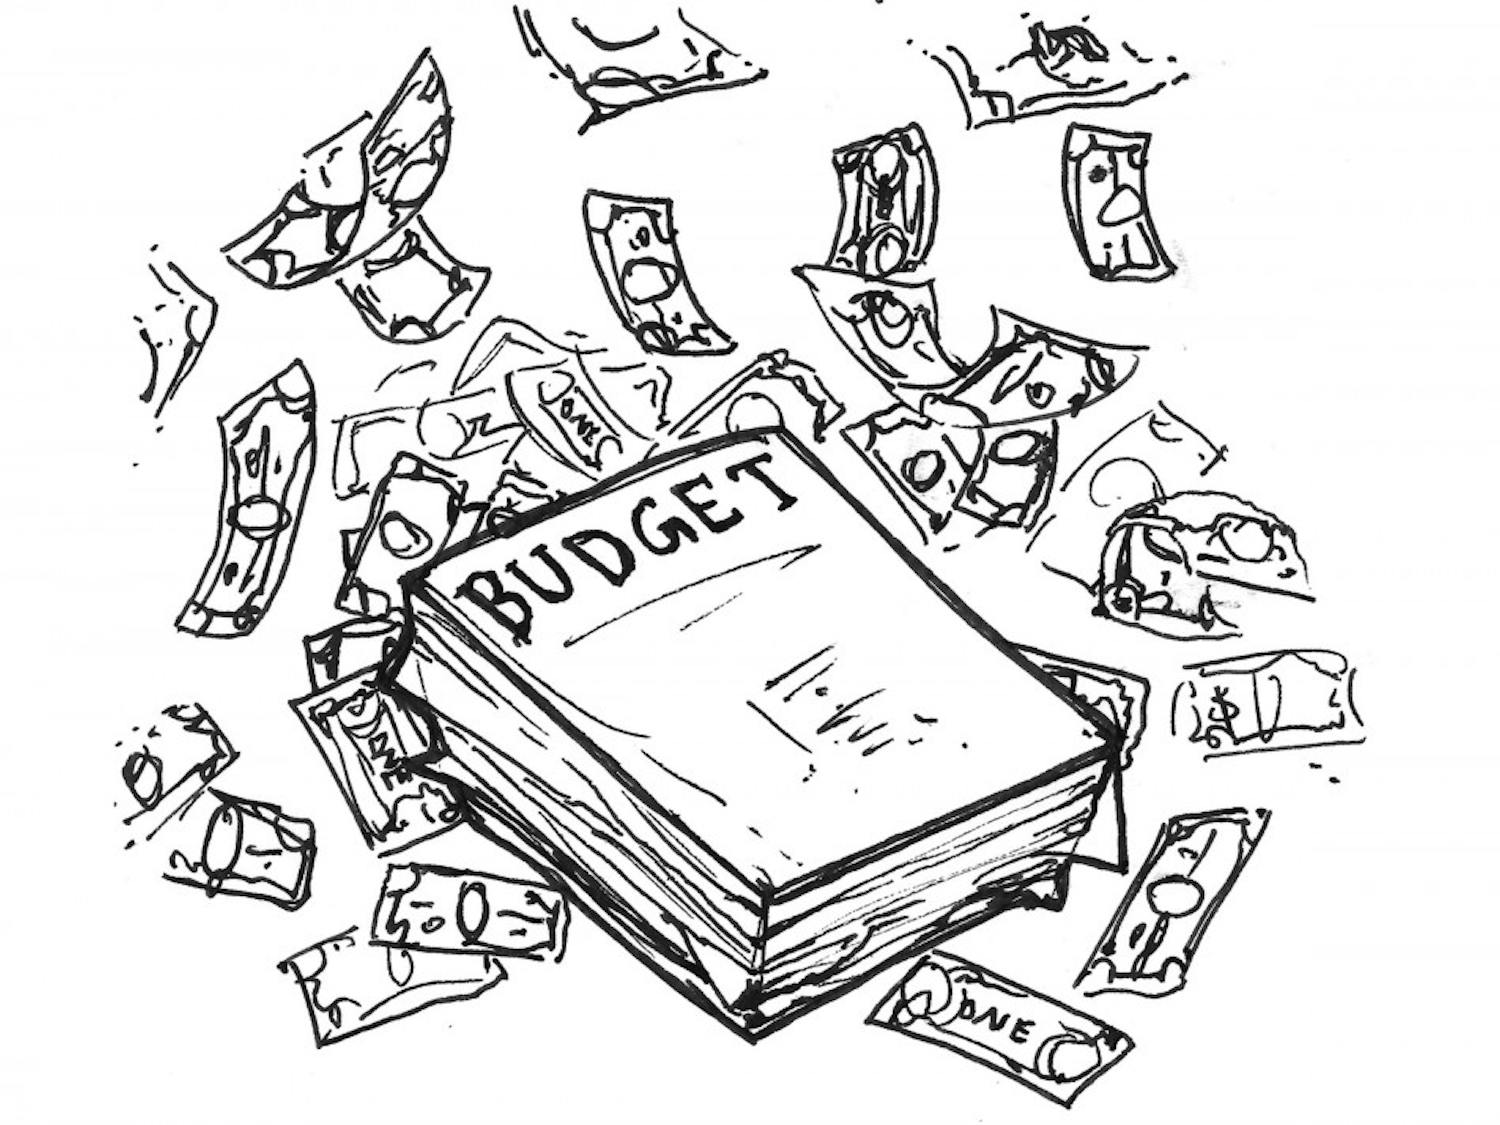 budget_illustration-1